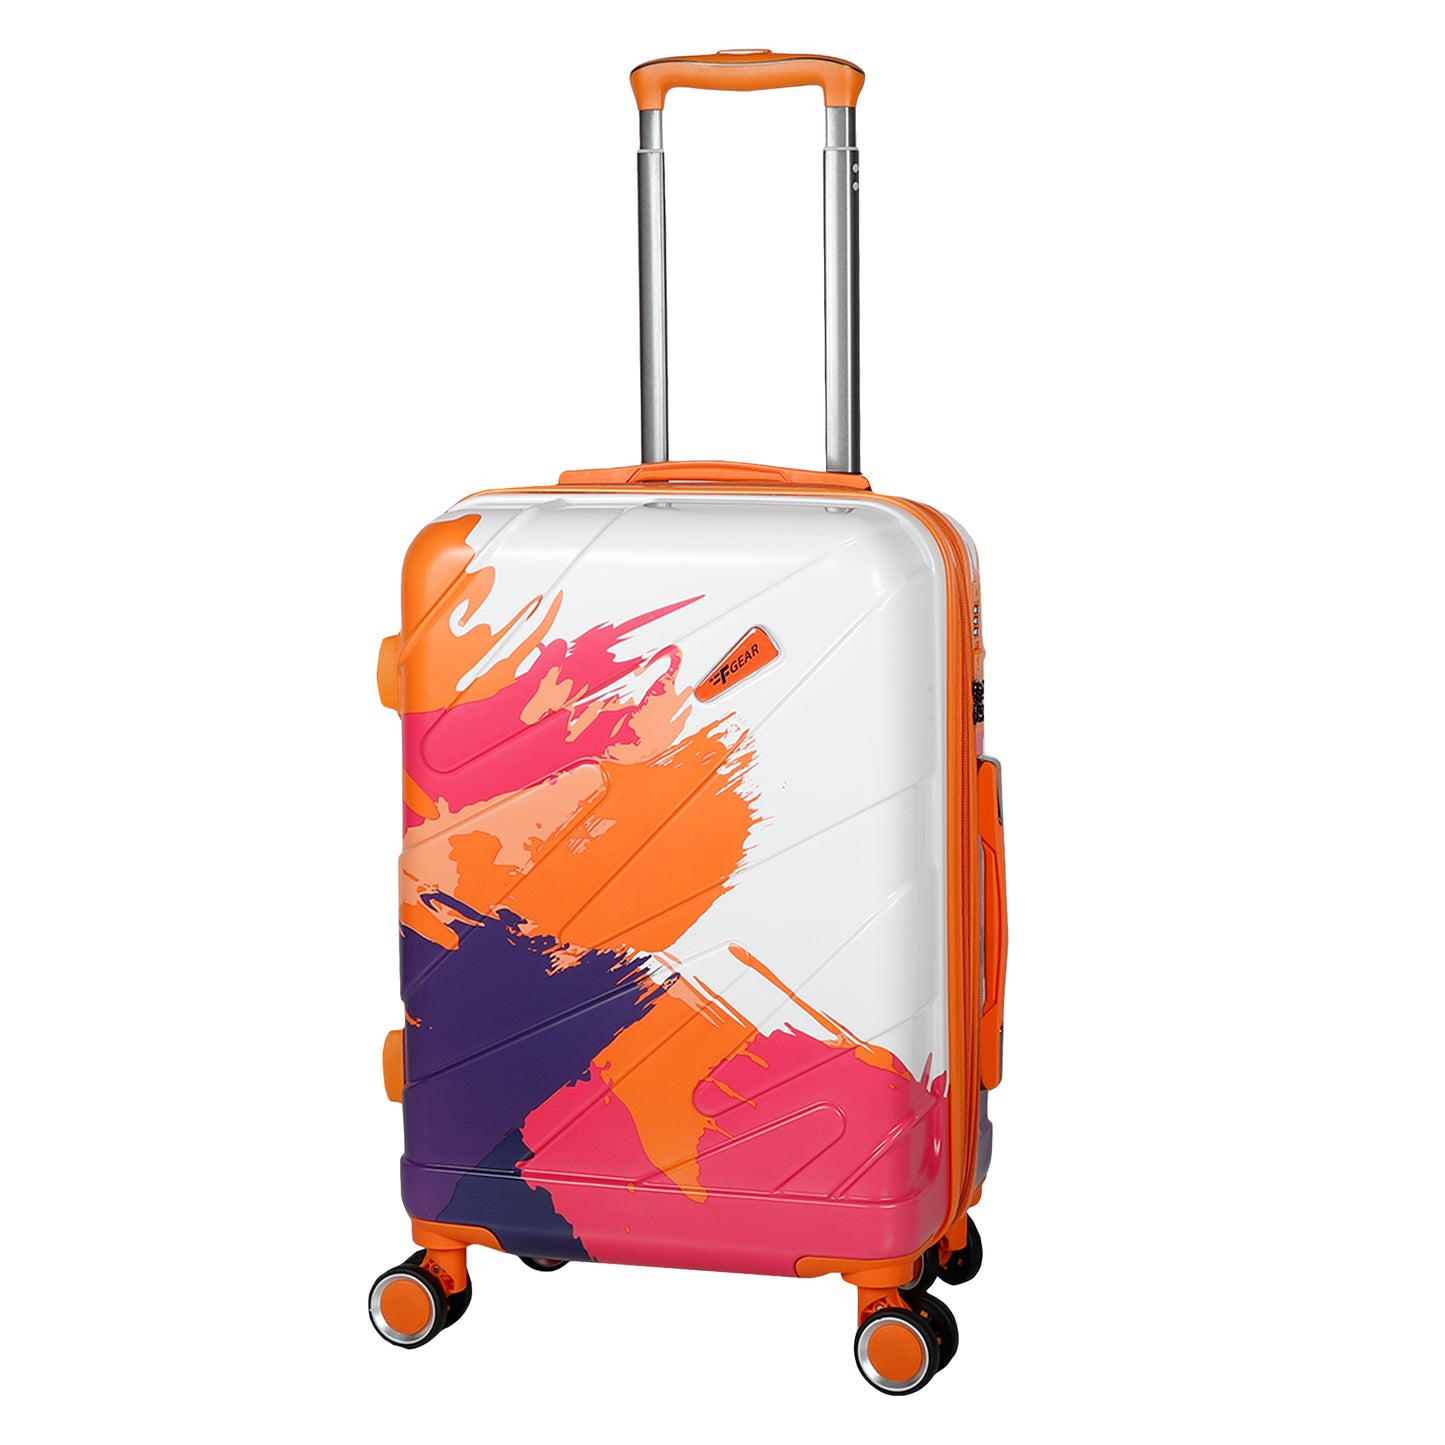 Picasso 20" Orange Expandable Cabin (Small) Suitcase